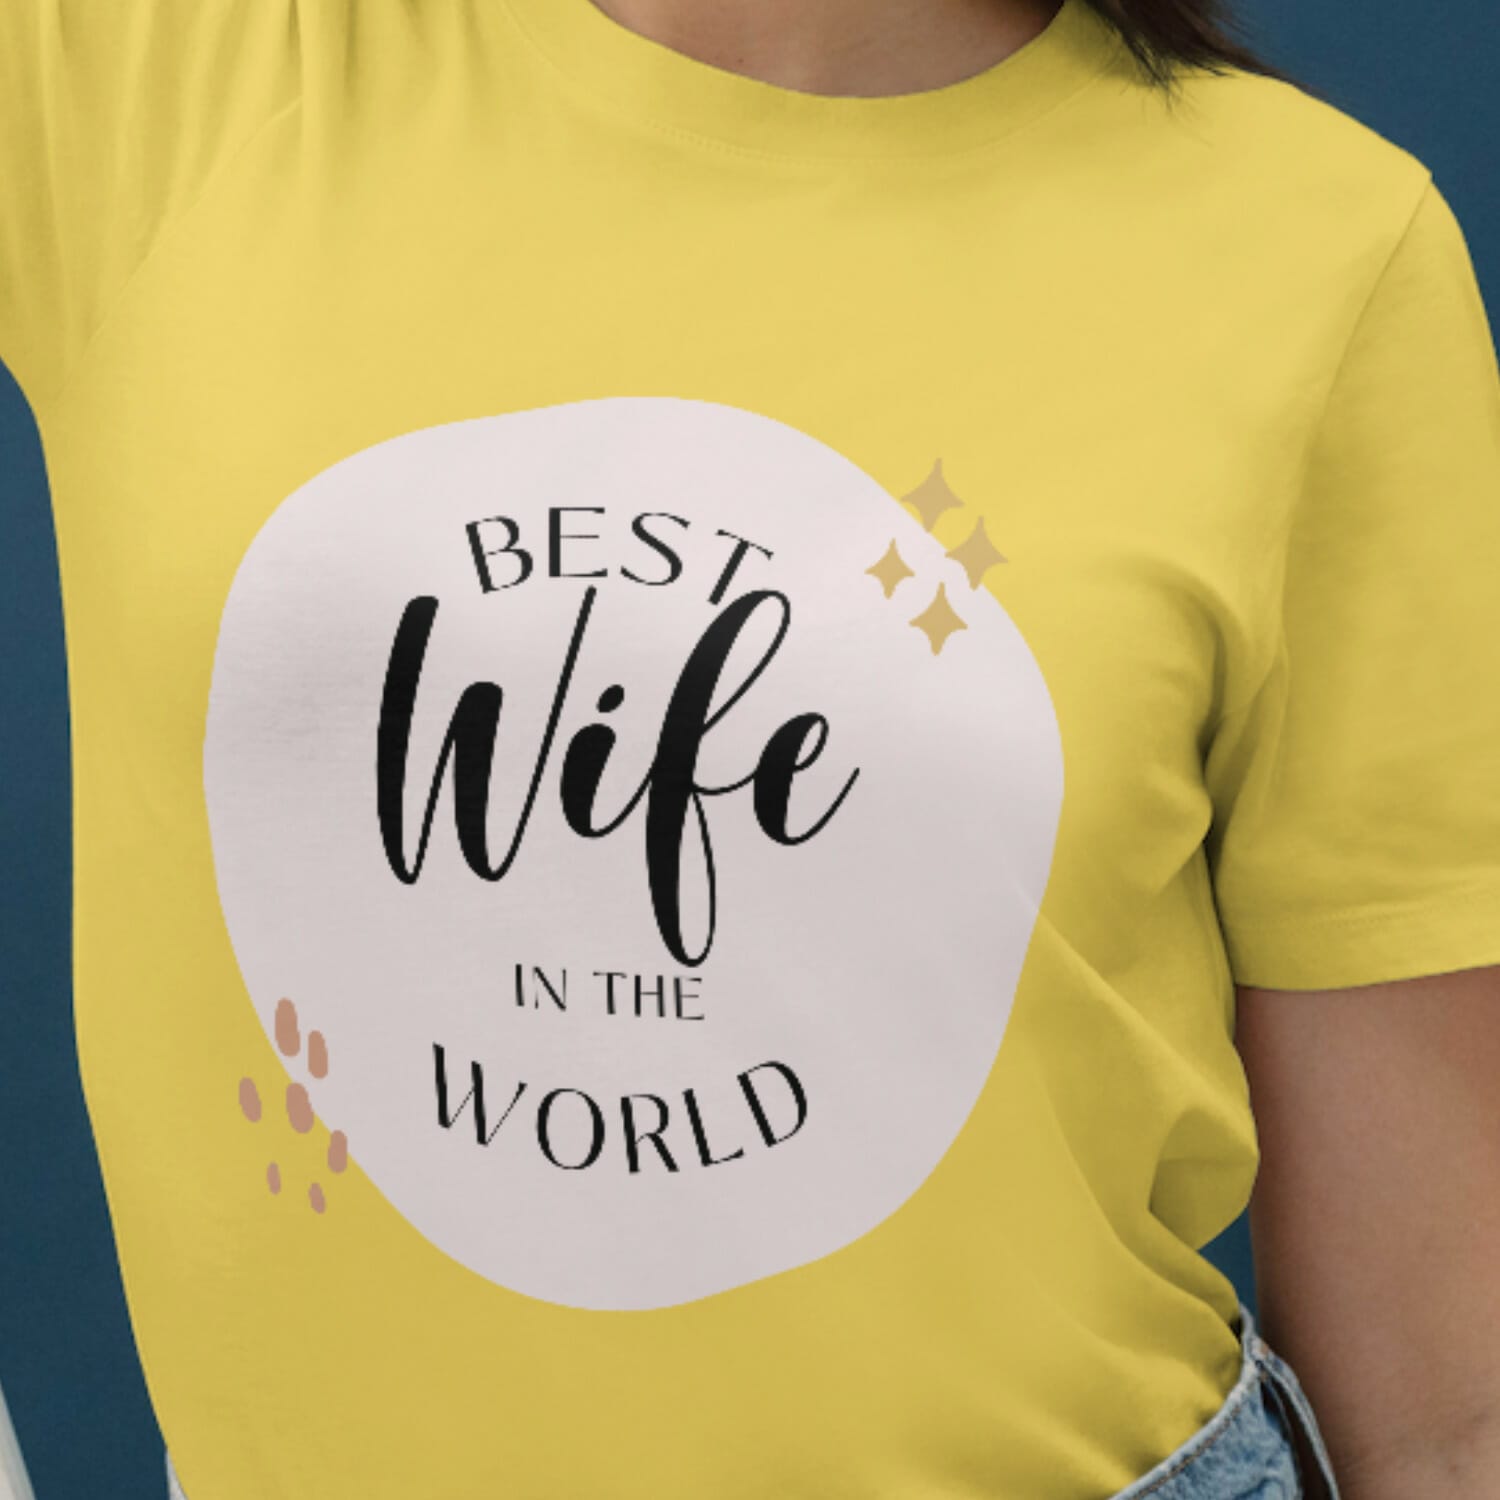 Best wife in the world Tshirt design